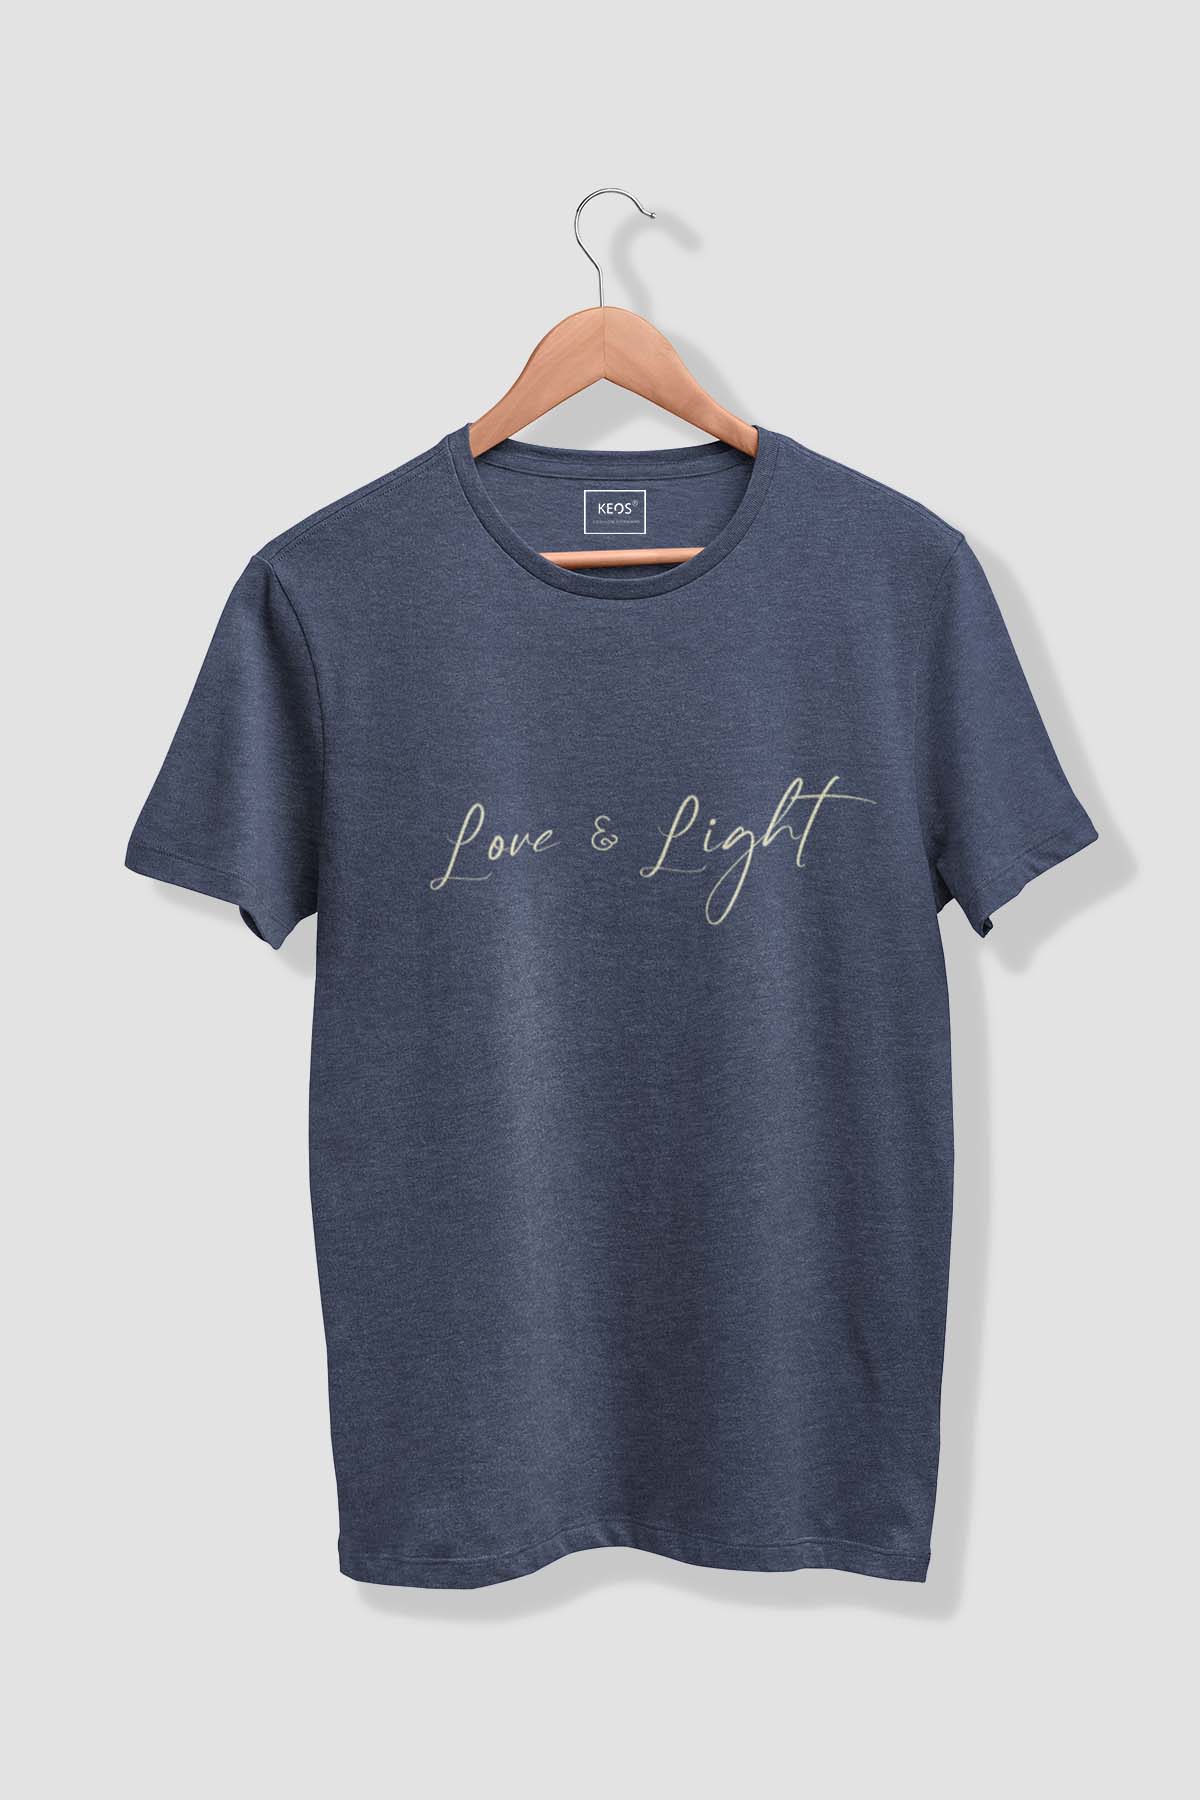 Love & Light - Melange Cotton T-shirt - keos.life